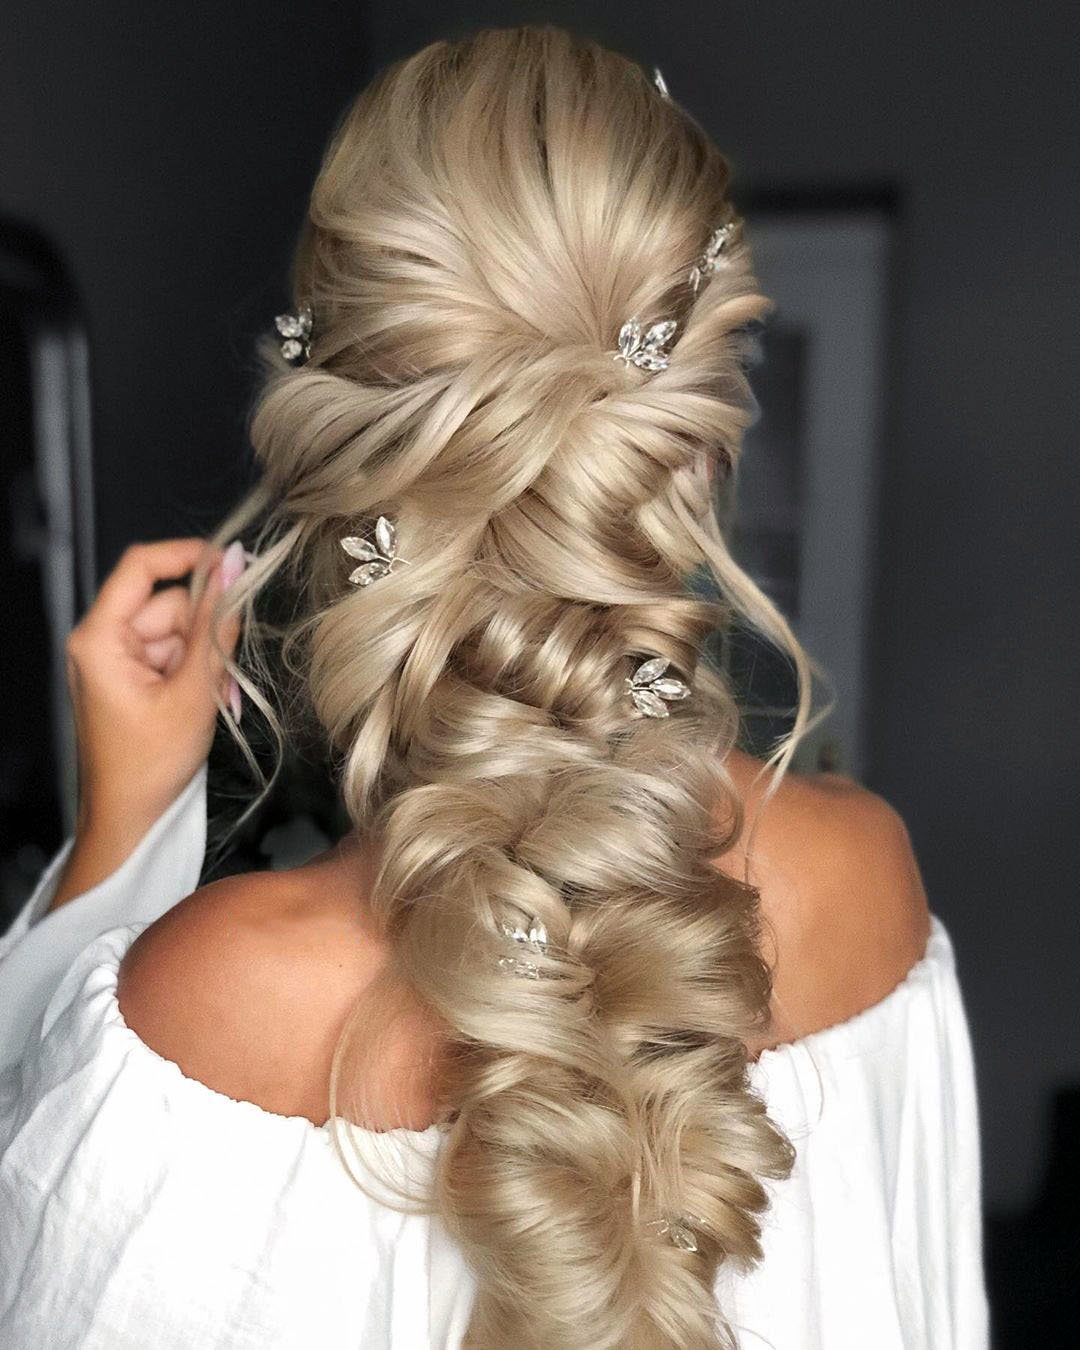 boho wedding hairstyles half updo for long hair blonde bride martinajagr